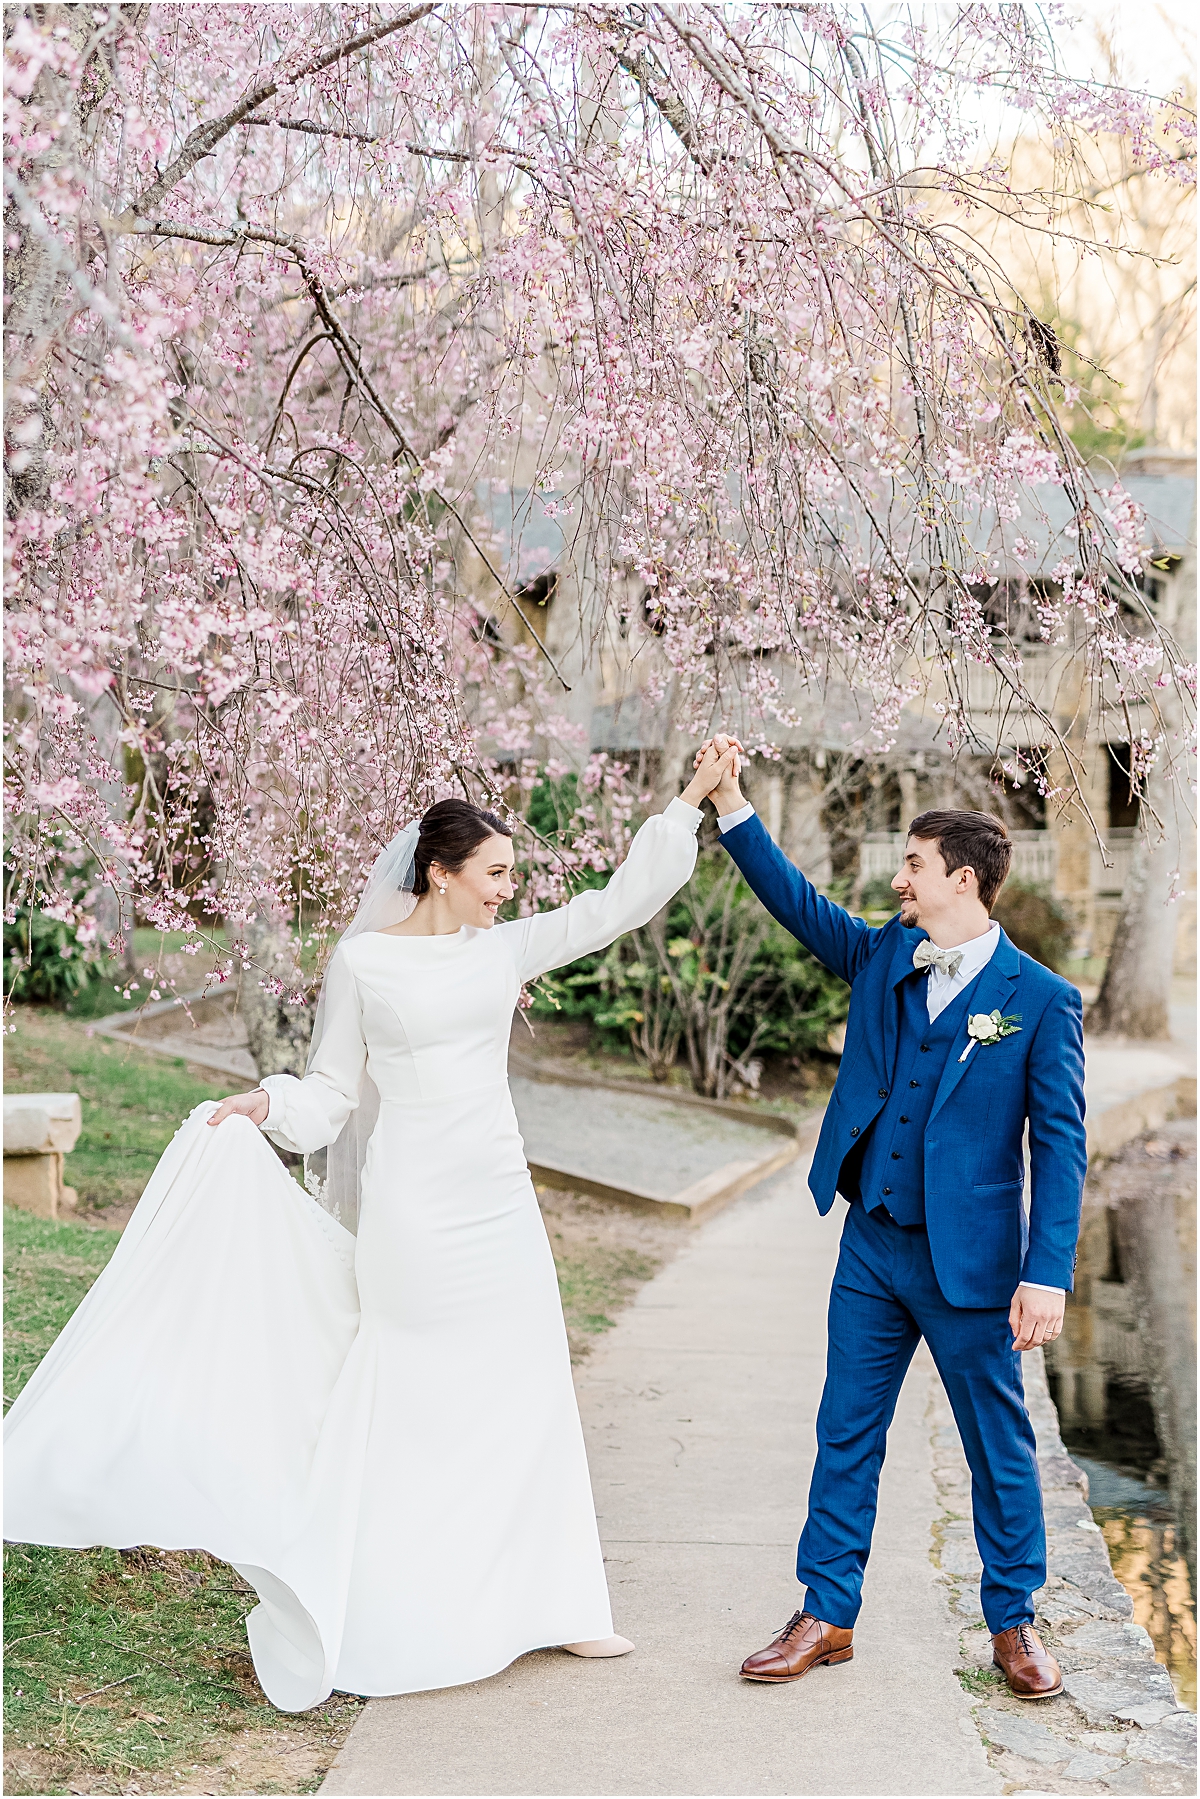 Grooms twirls bride under cherry blossom tree in North Carolina Mountains